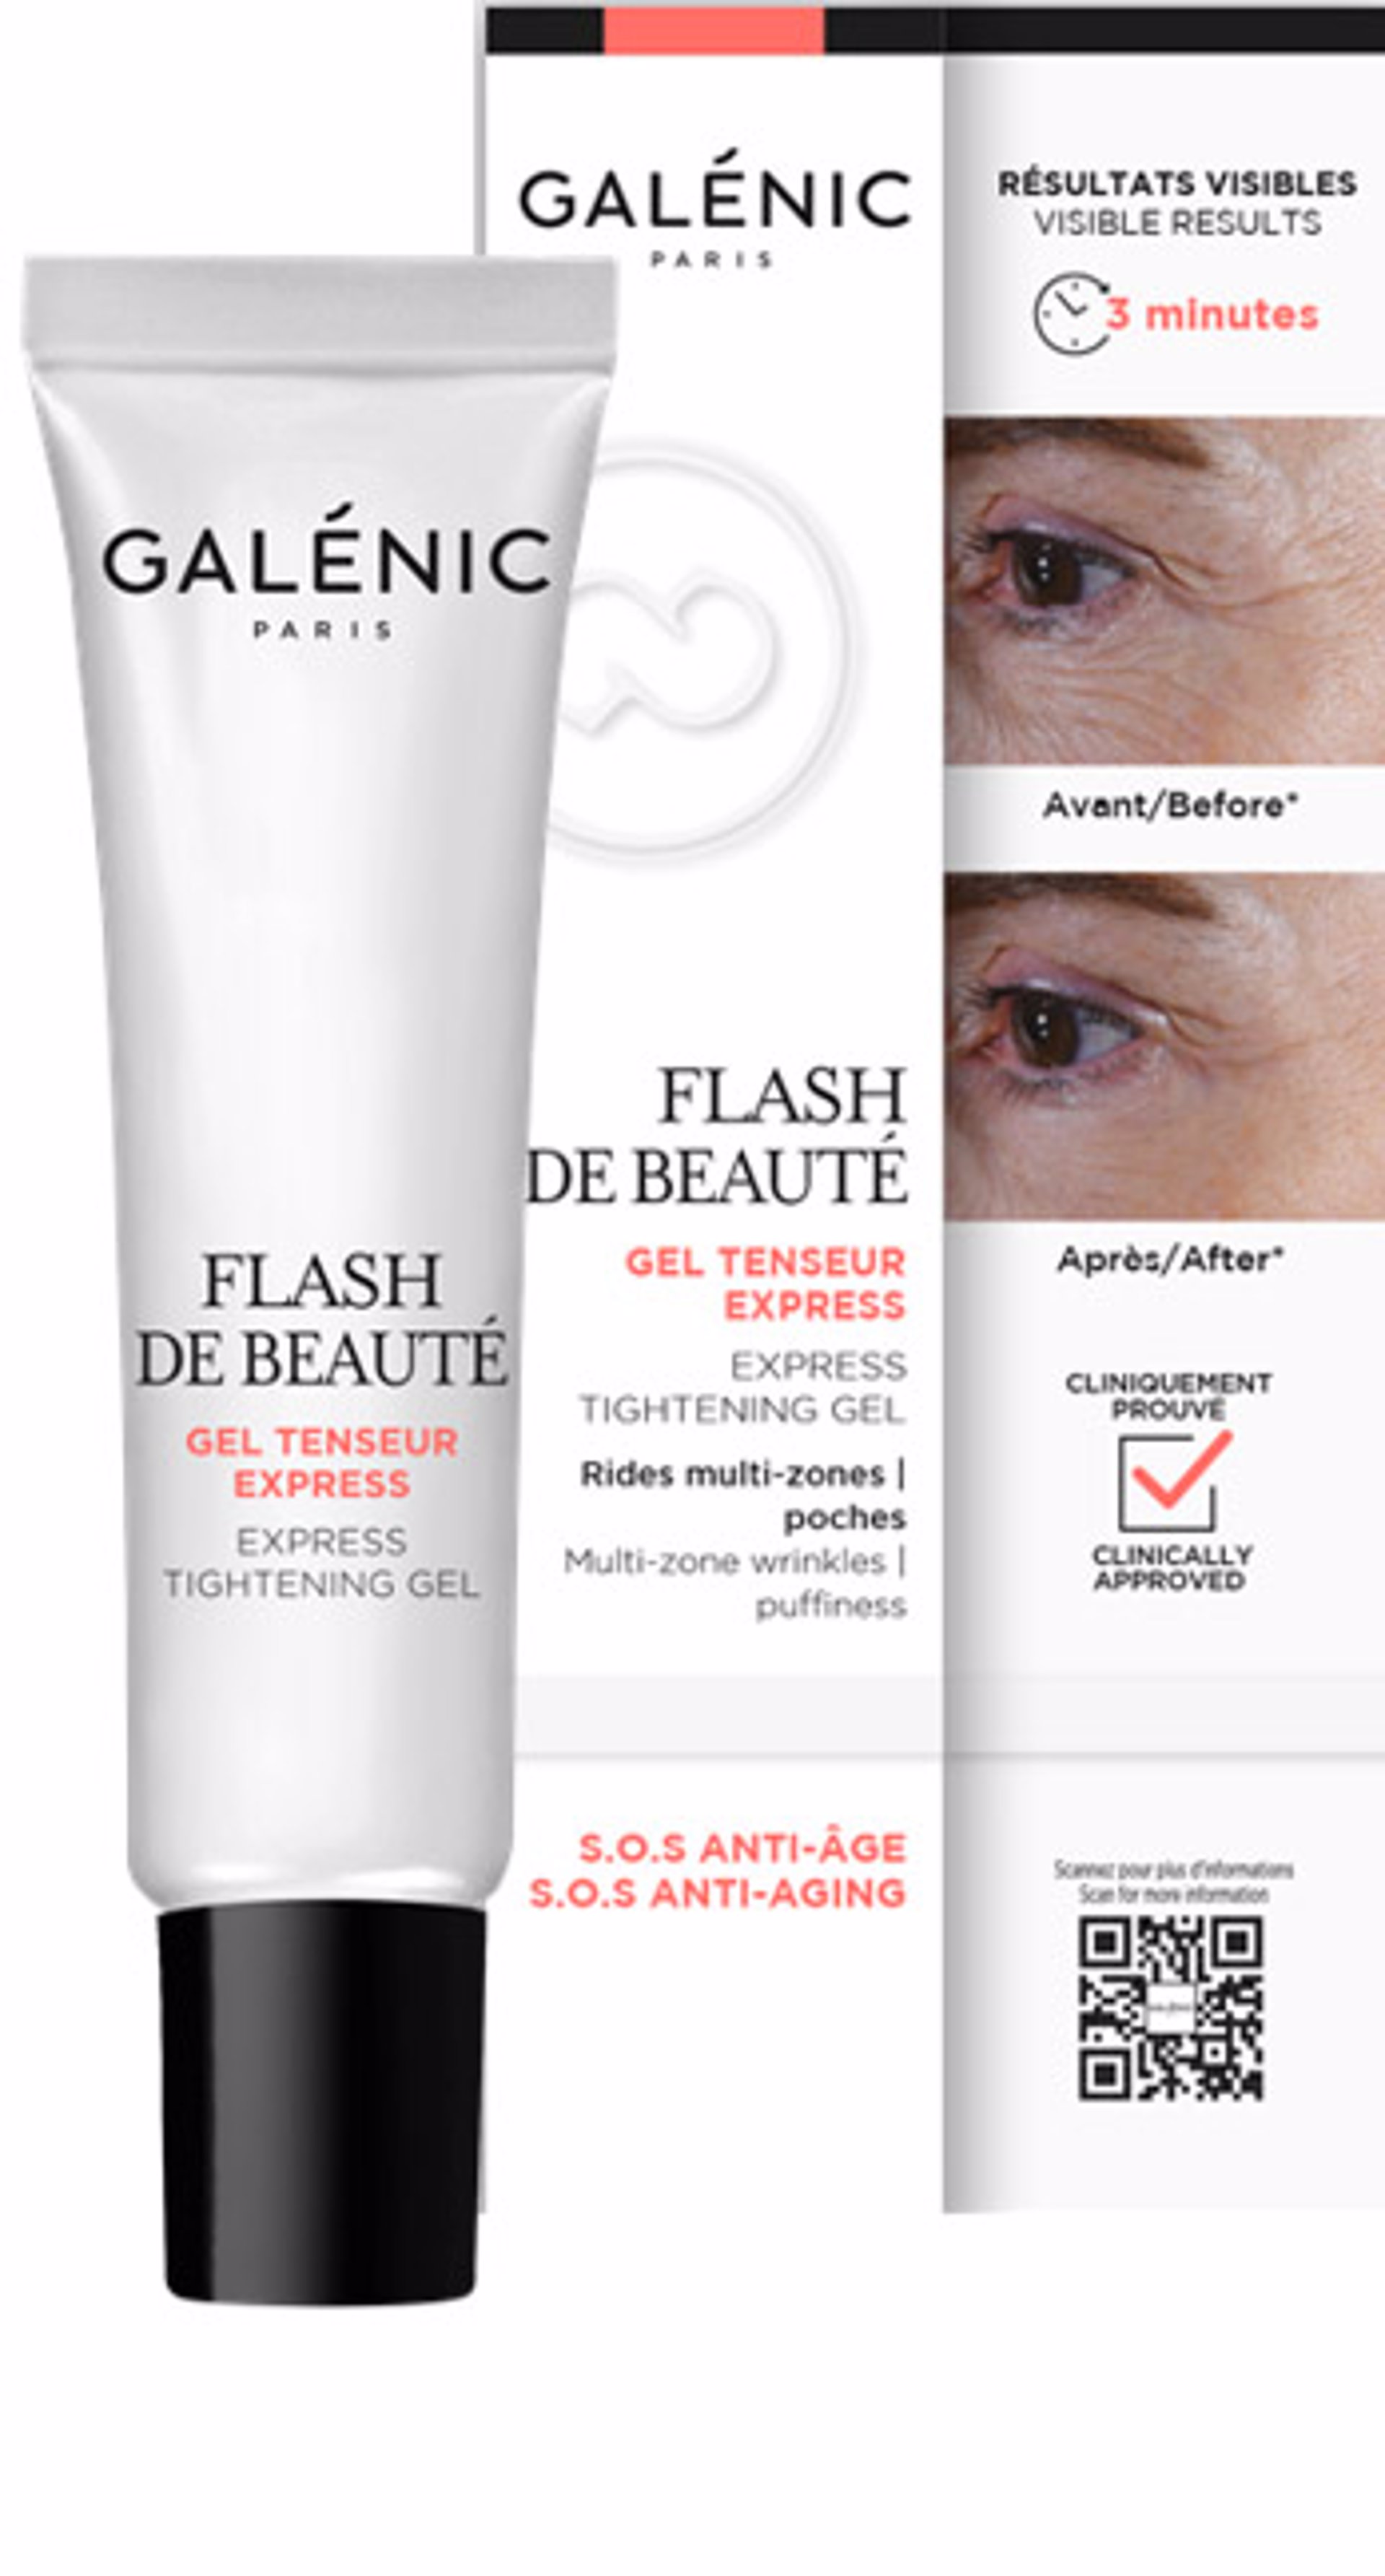 Flash de Beauté, un producto "milagroso" para lucir un rostro sin arrugas